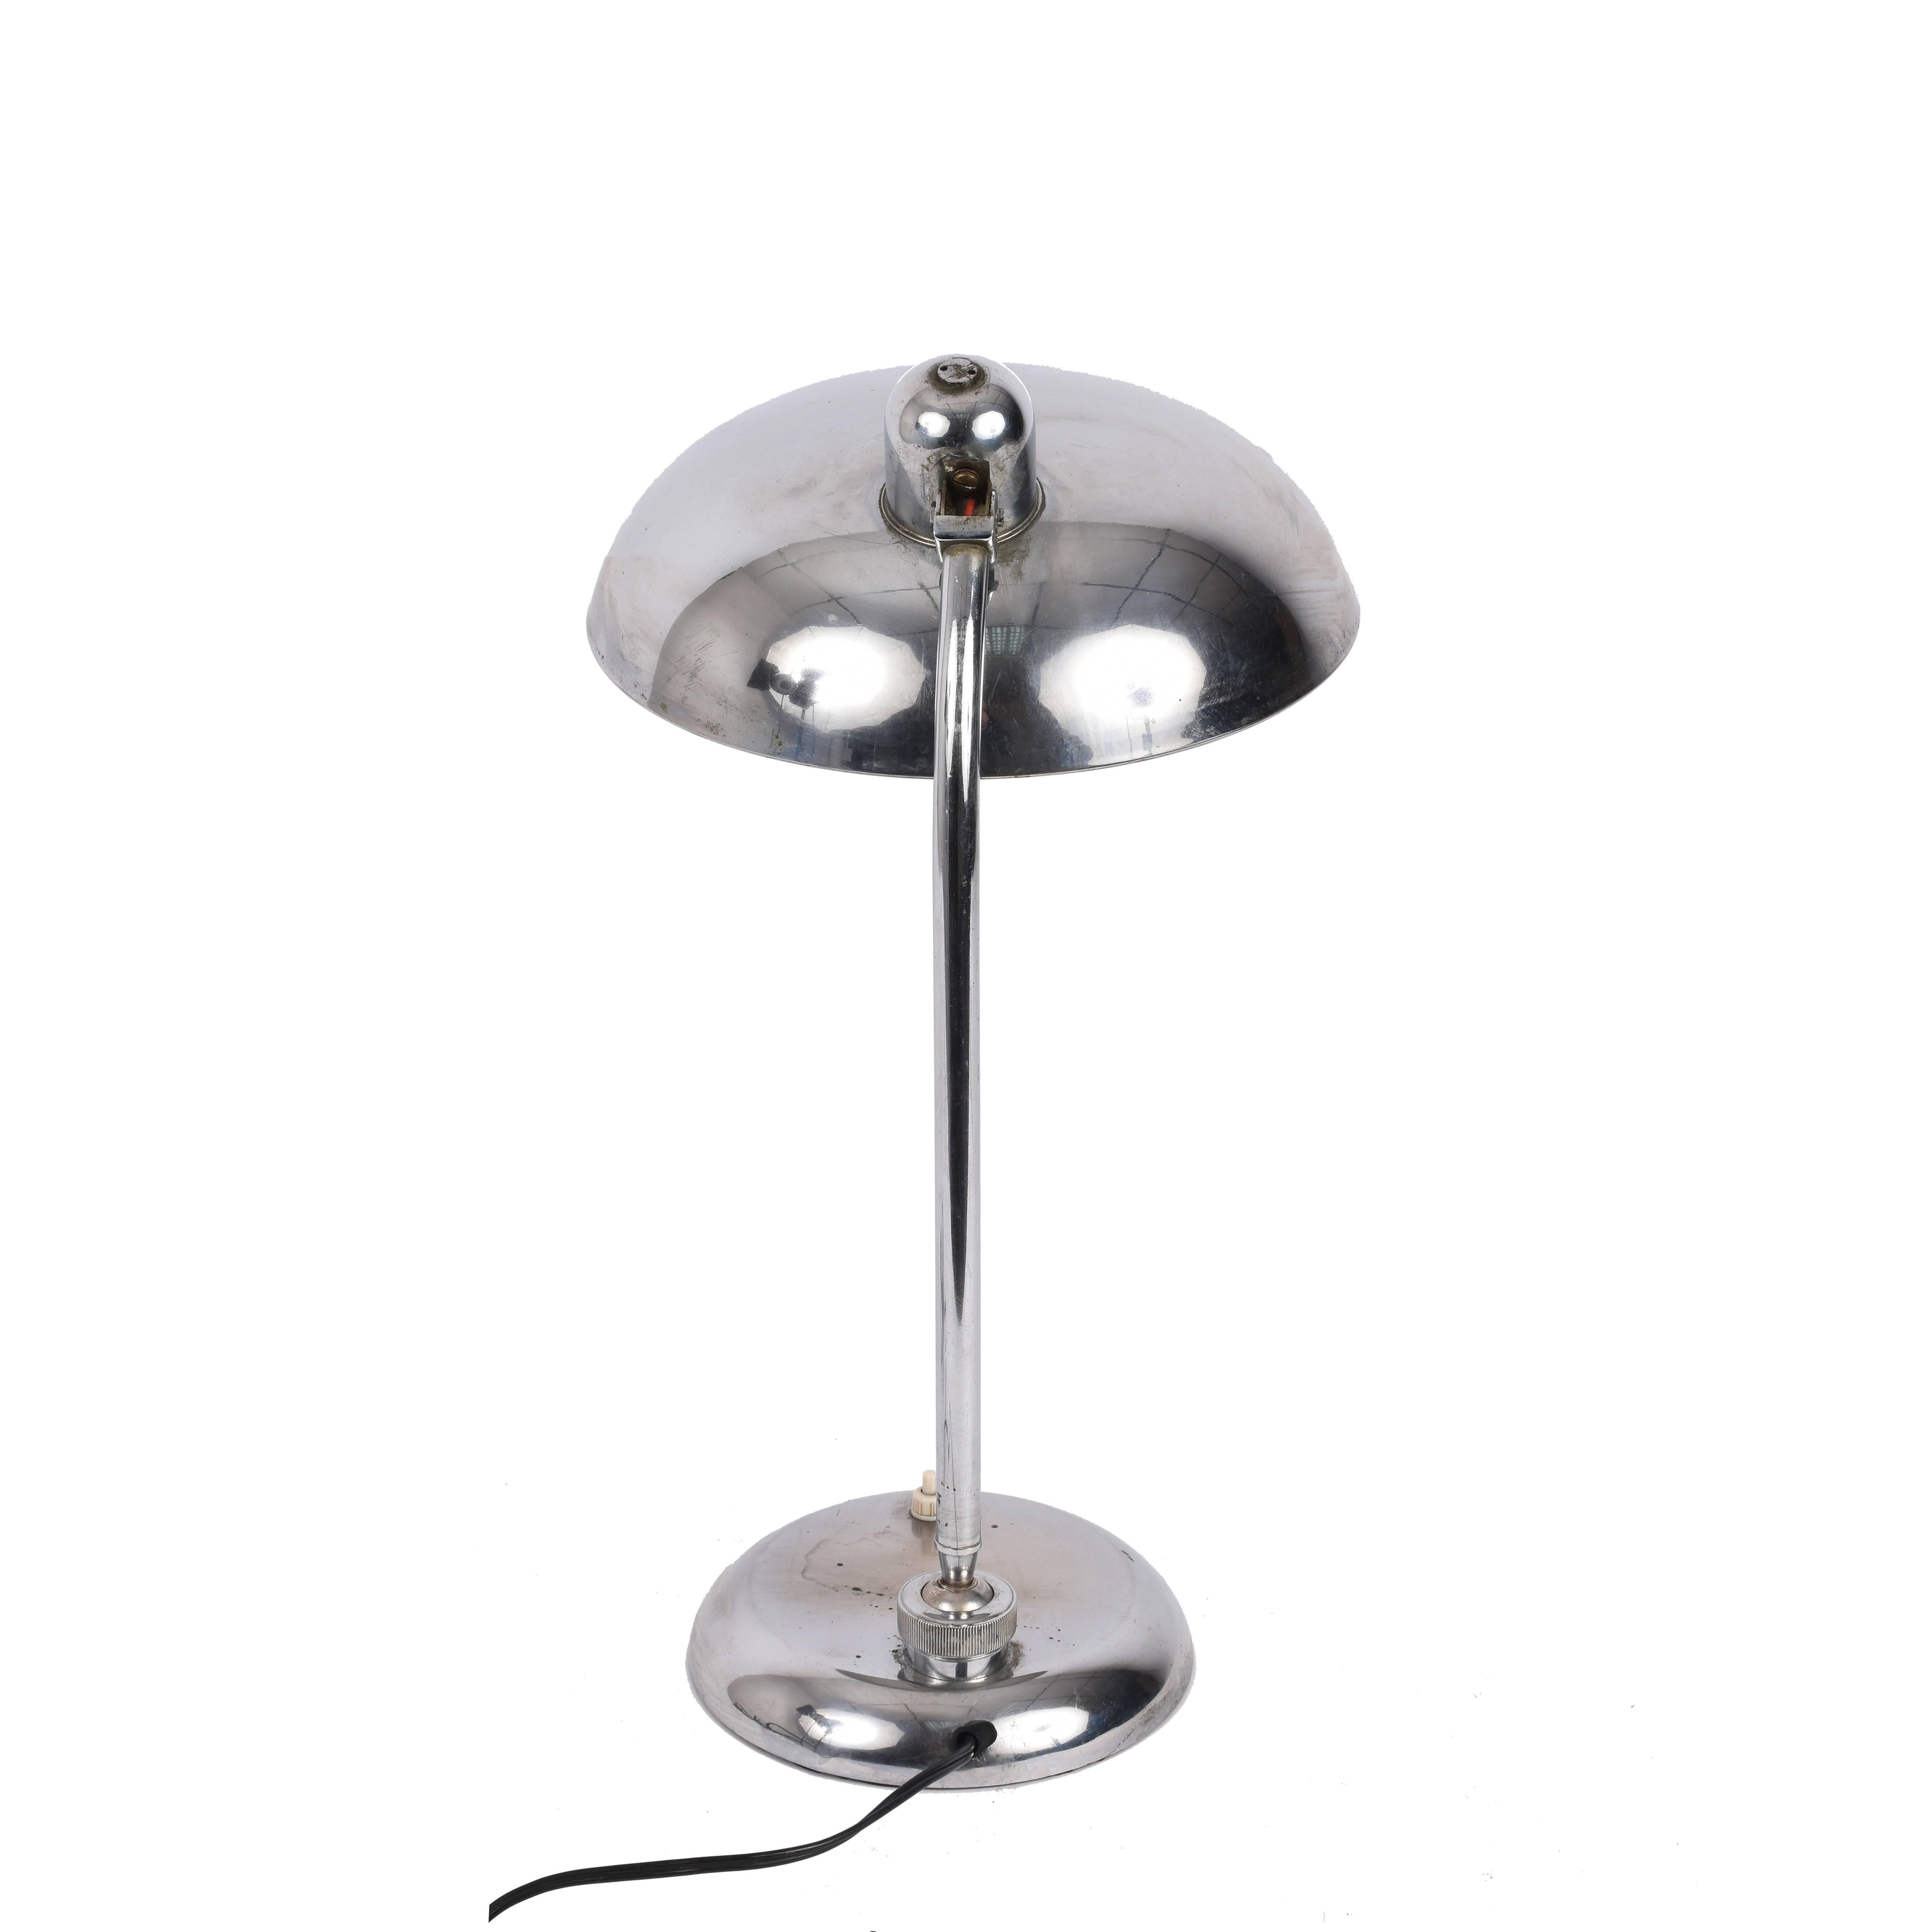 German Bauhaus Steel Table Lamp 1940s Industrial, Attributable to Dell, Lighting